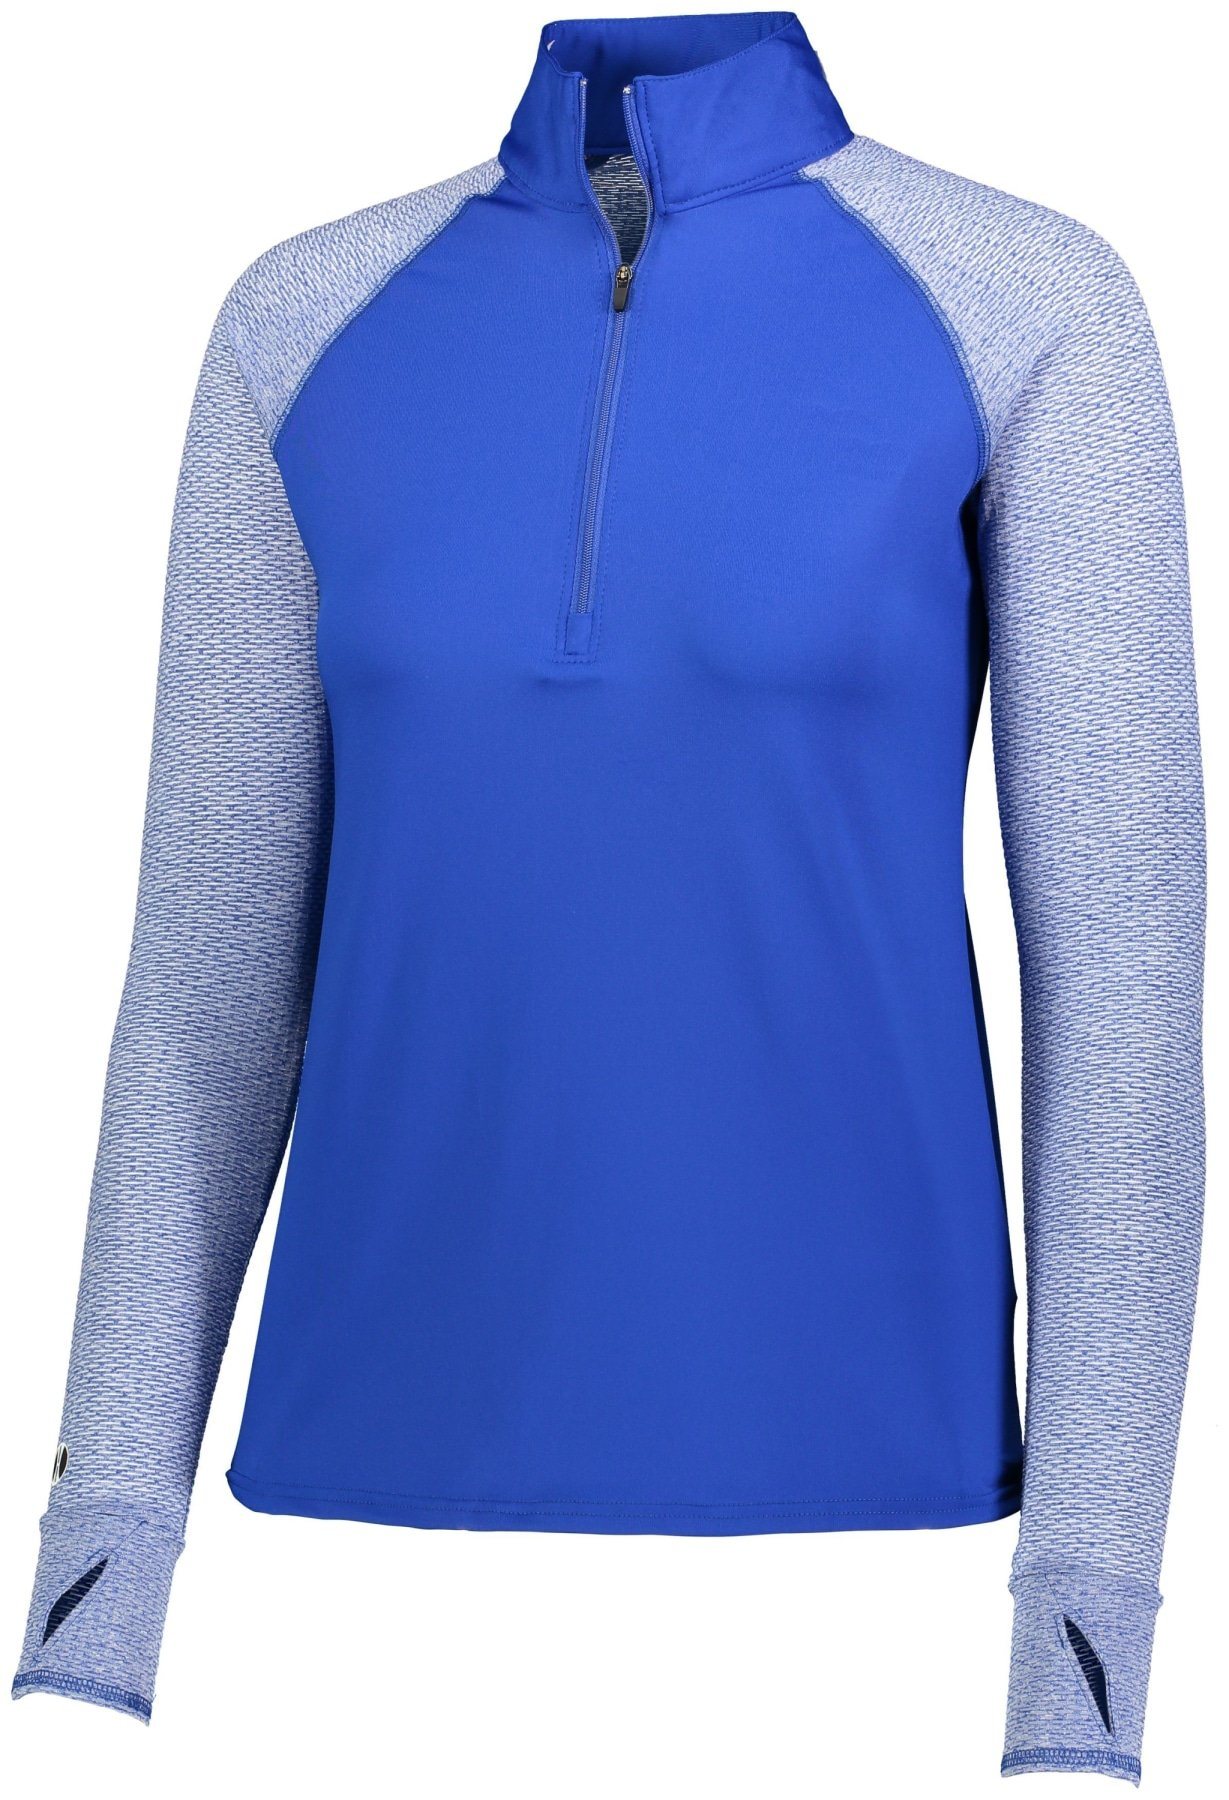 Ladies Athletic Shirt, Long Sleeve Axis 1/2 Zip Pullover 40